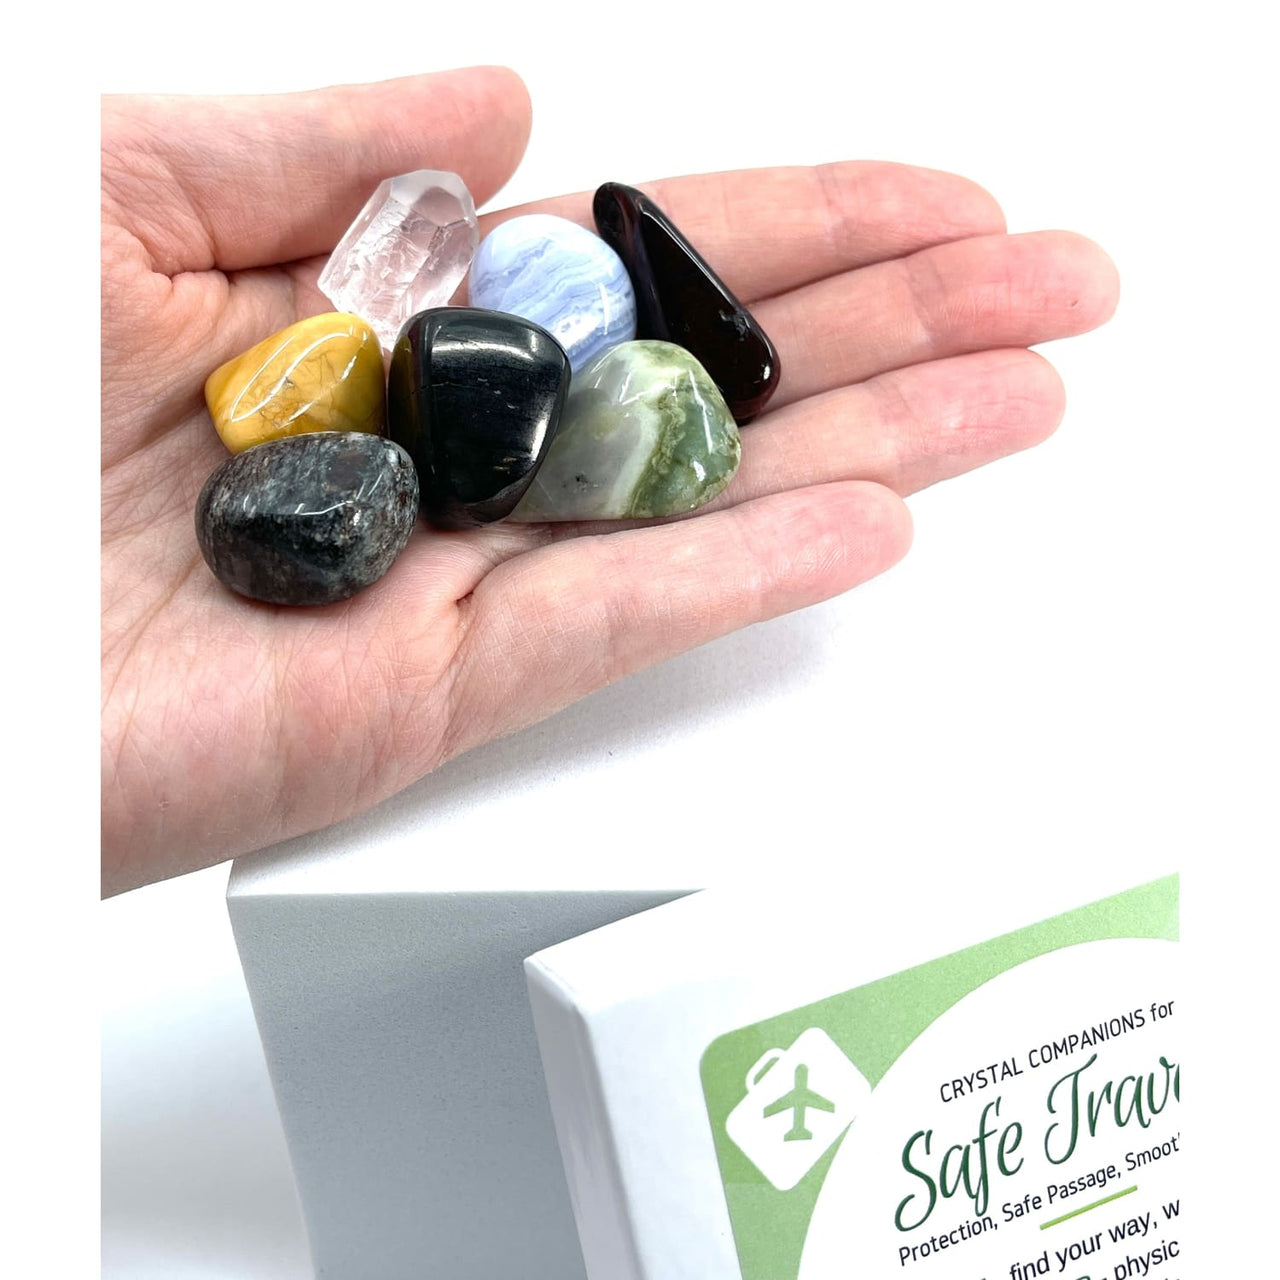 Safe Travels Crystal Companion Set w Gift Box #SK6980K - $39